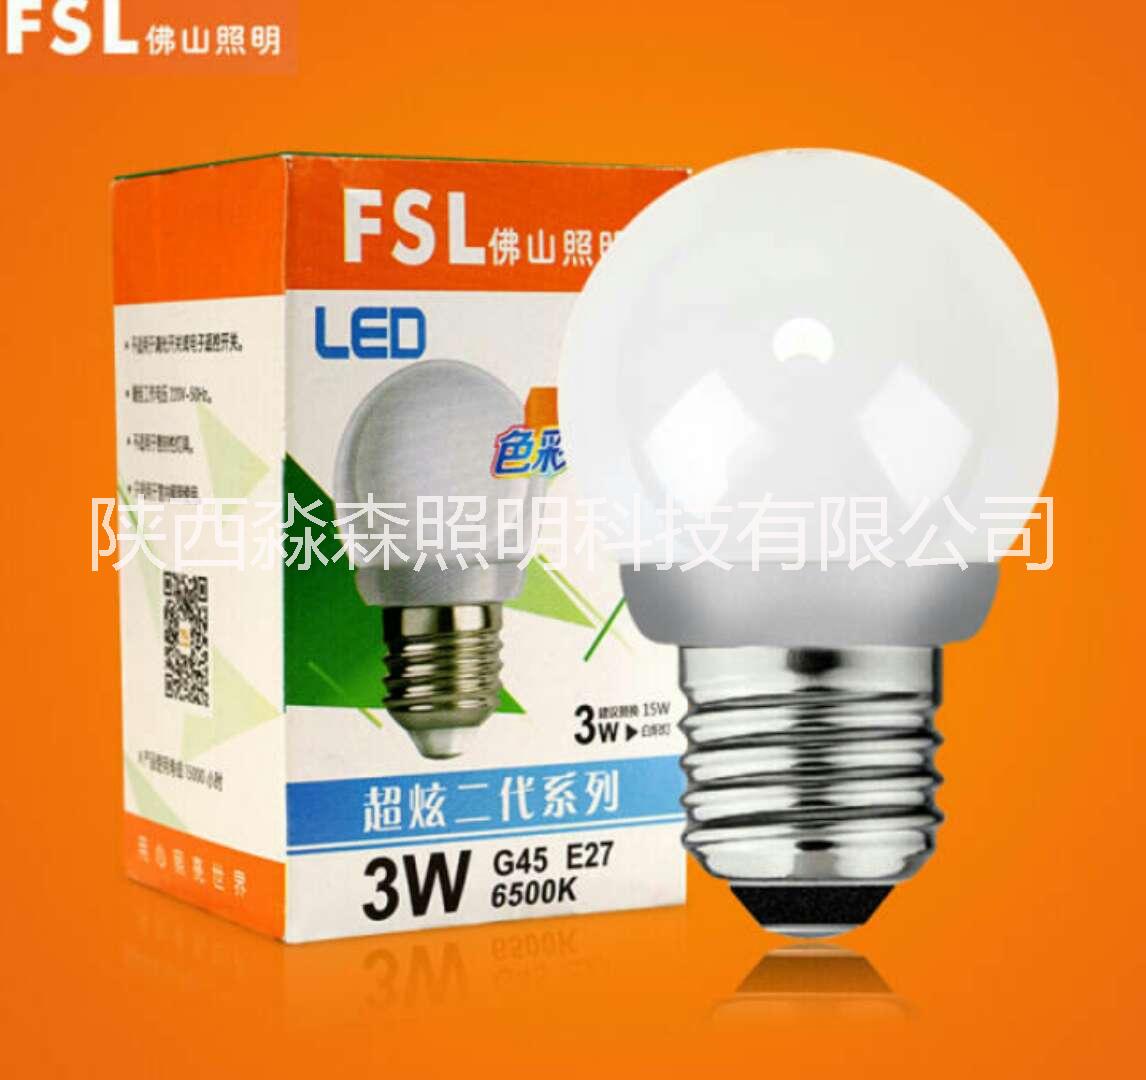 LED灯，照明灯，吸顶灯，浴霸，安全出口 佛山照明LED3W球泡